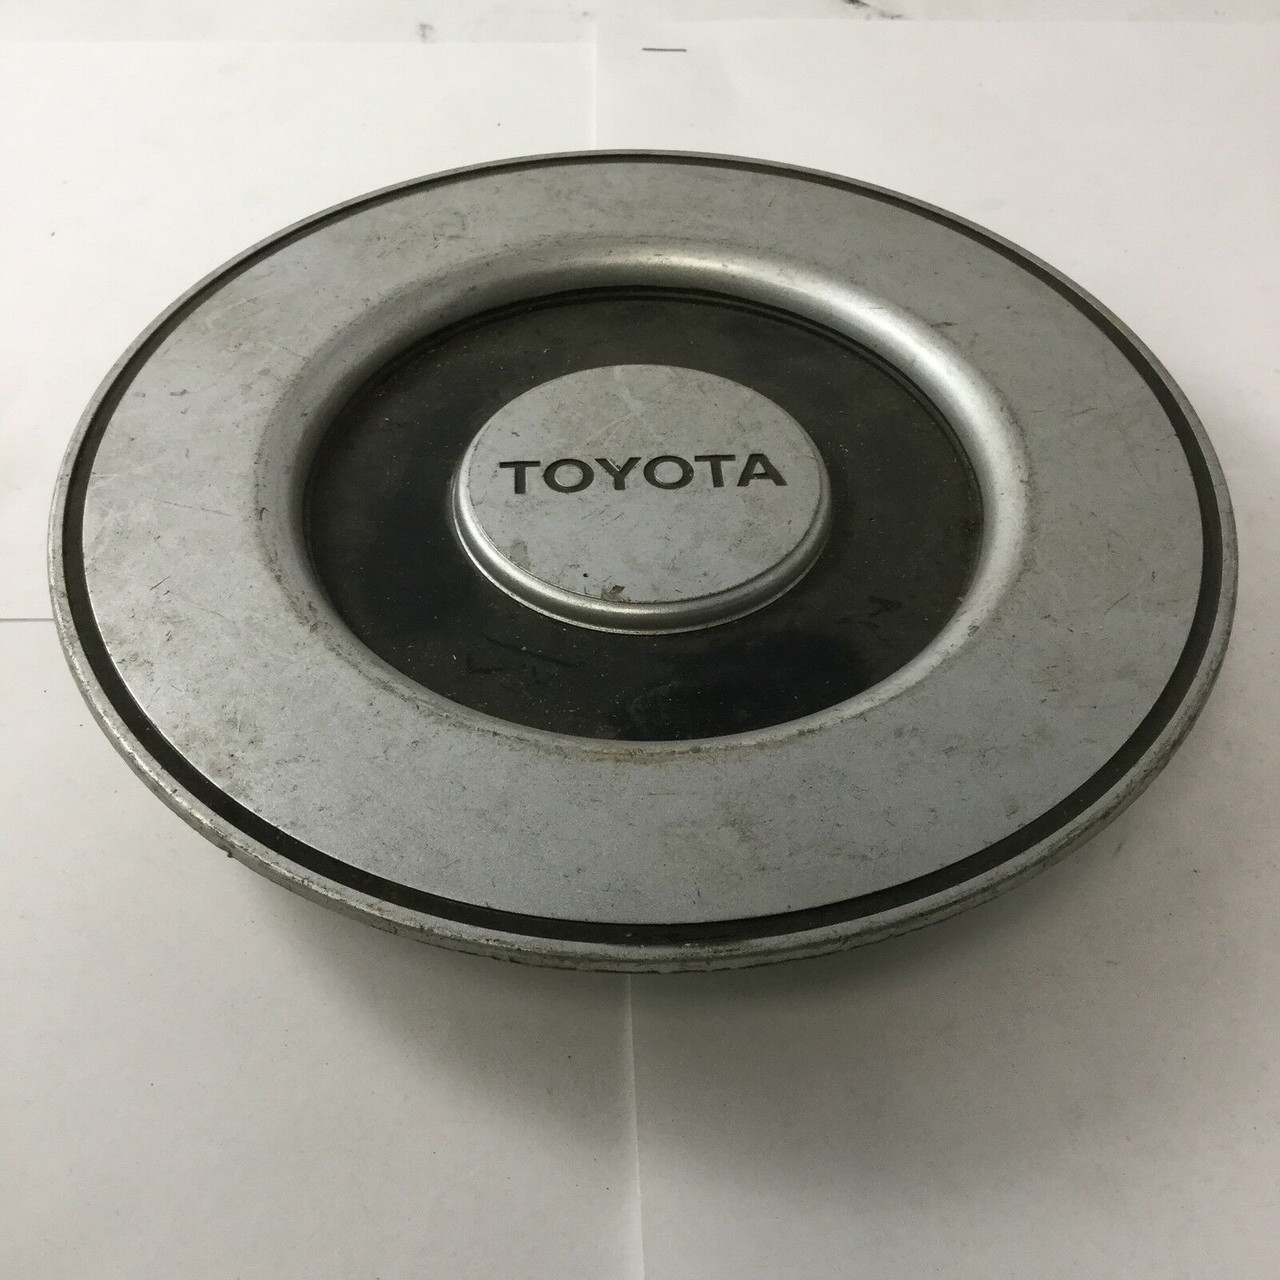 Toyota Factory OEM Wheel Rim Center Hub Cap Silver Black 7.75" Diameter TO199